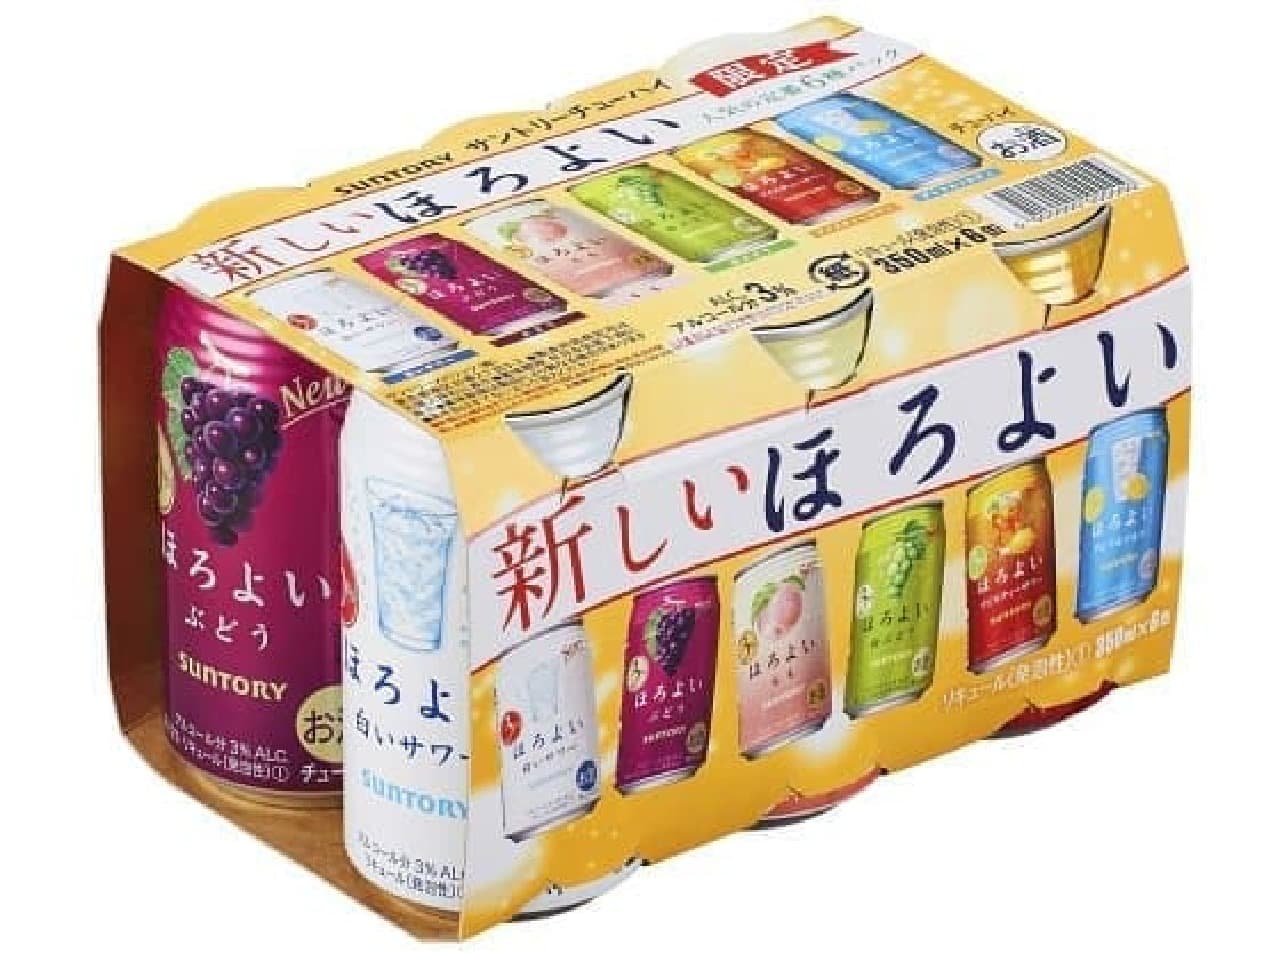 Suntory Chu-Hi "Horoyoi Assorted 6 Cans Pack"